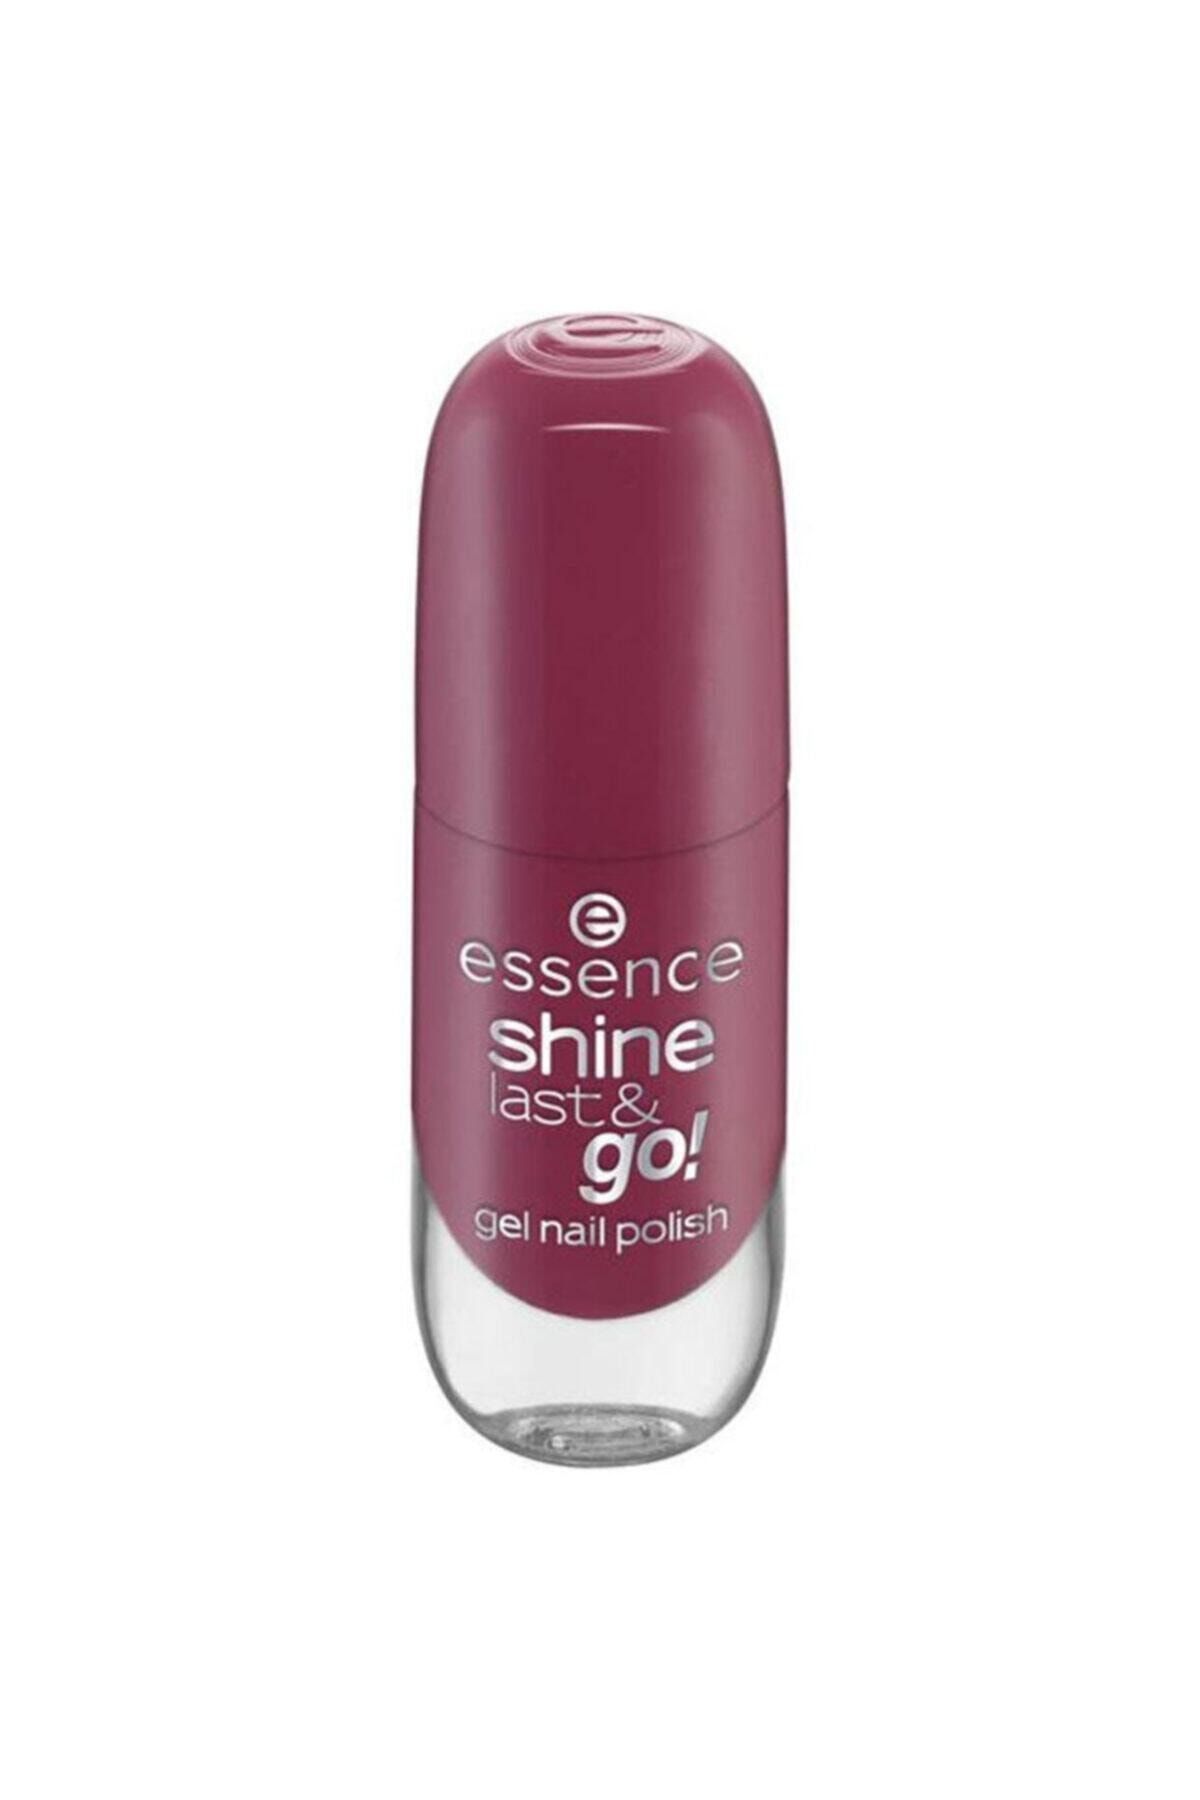 Essence Shine Last Go Gel Nail Polish - Jel Oje No:79 8ml